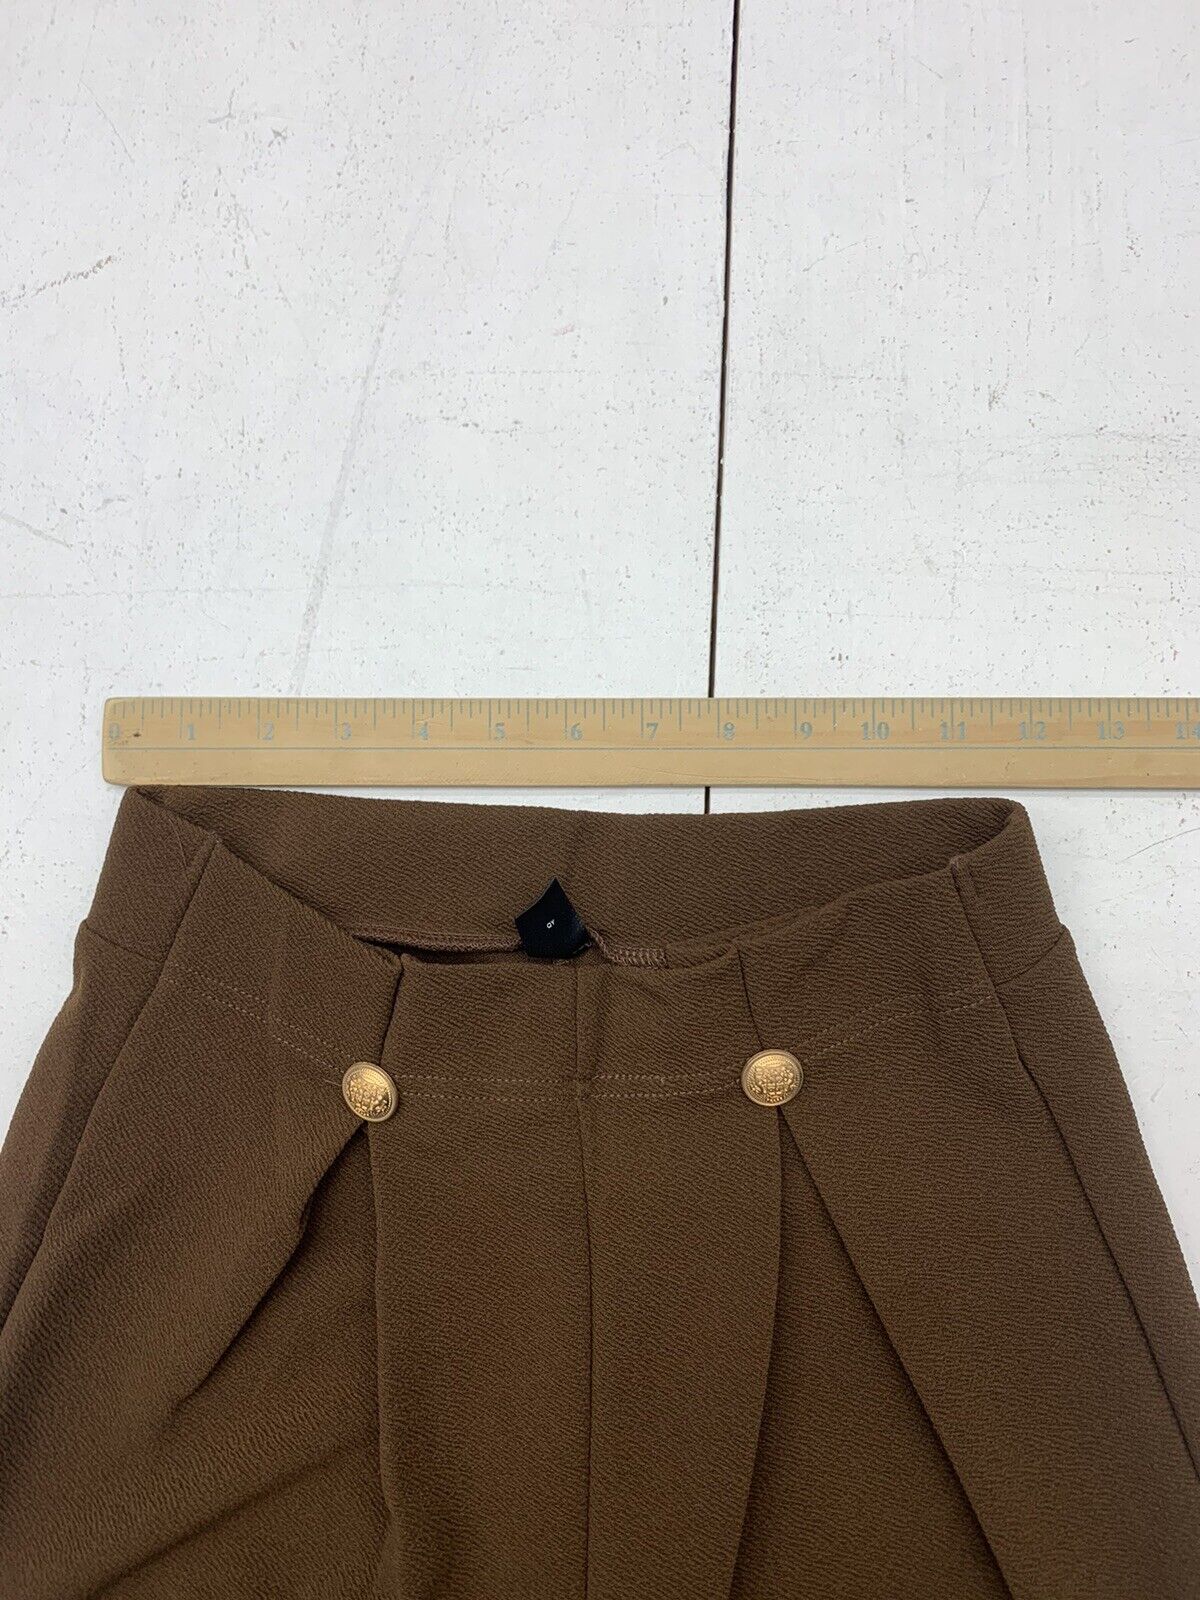 Shein Womens Brown Dress Pants Size Large - beyond exchange